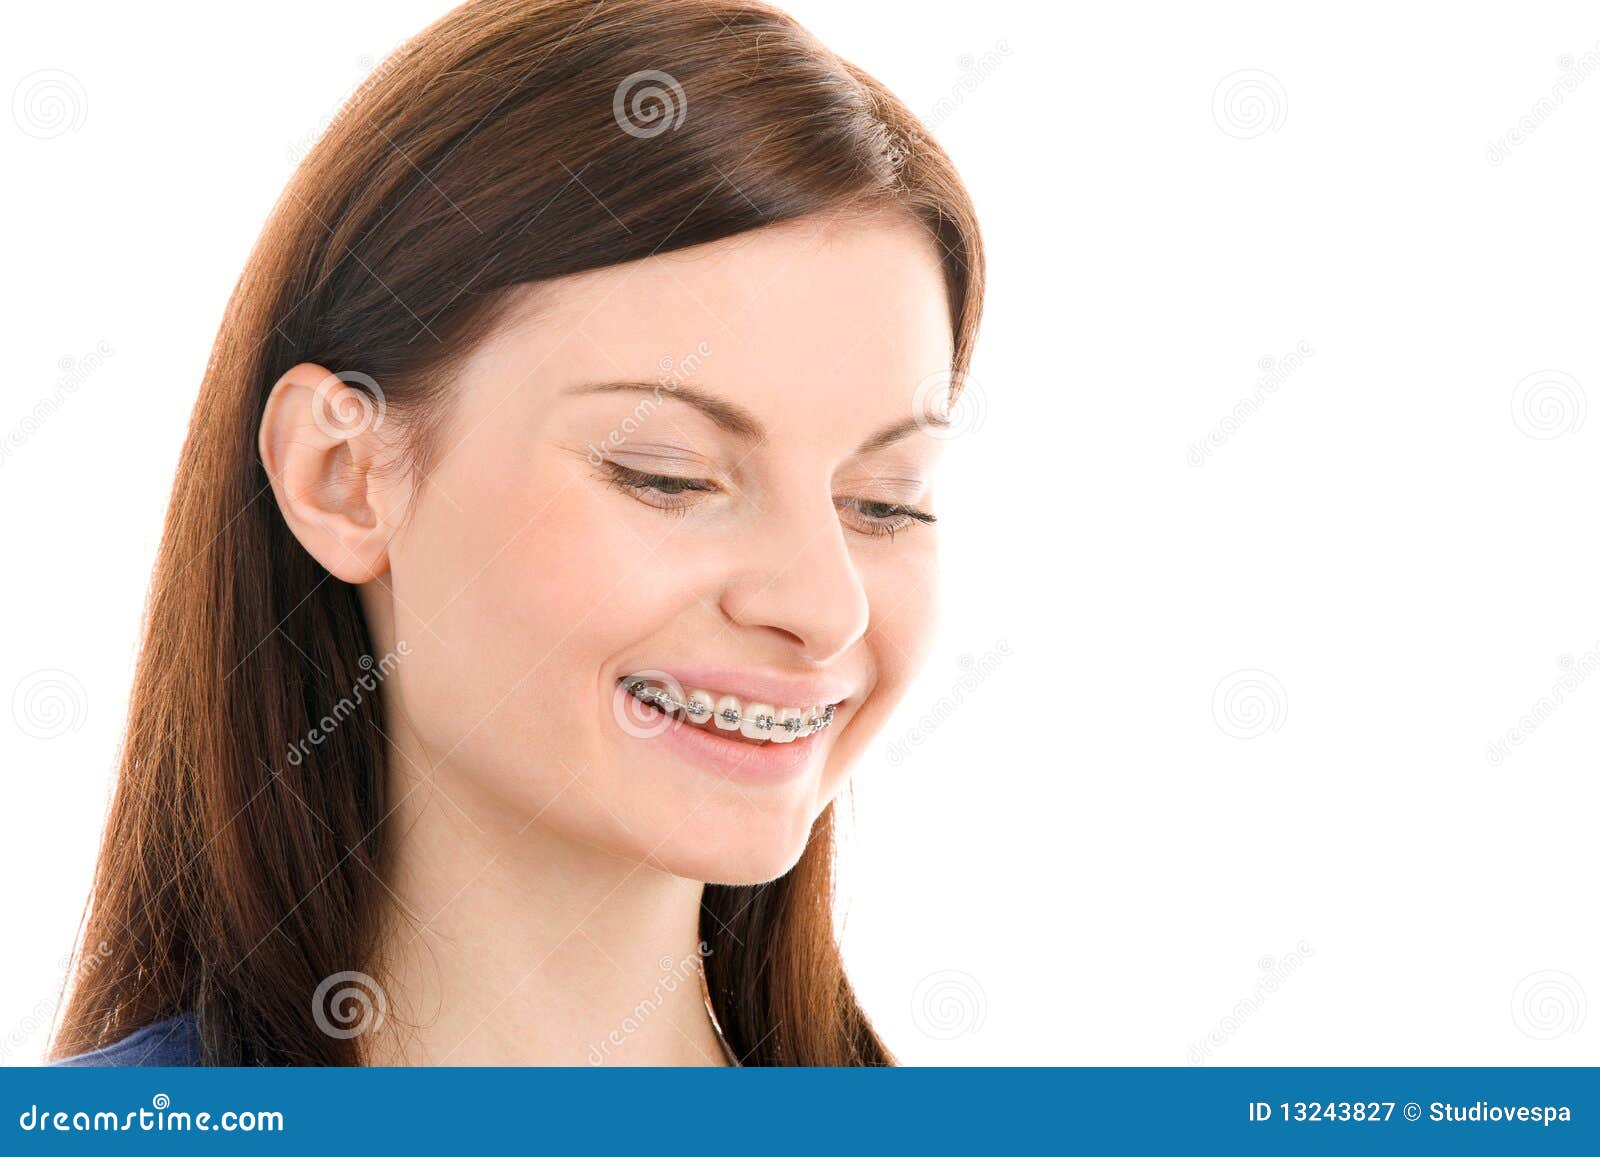 woman with brackets on teeth